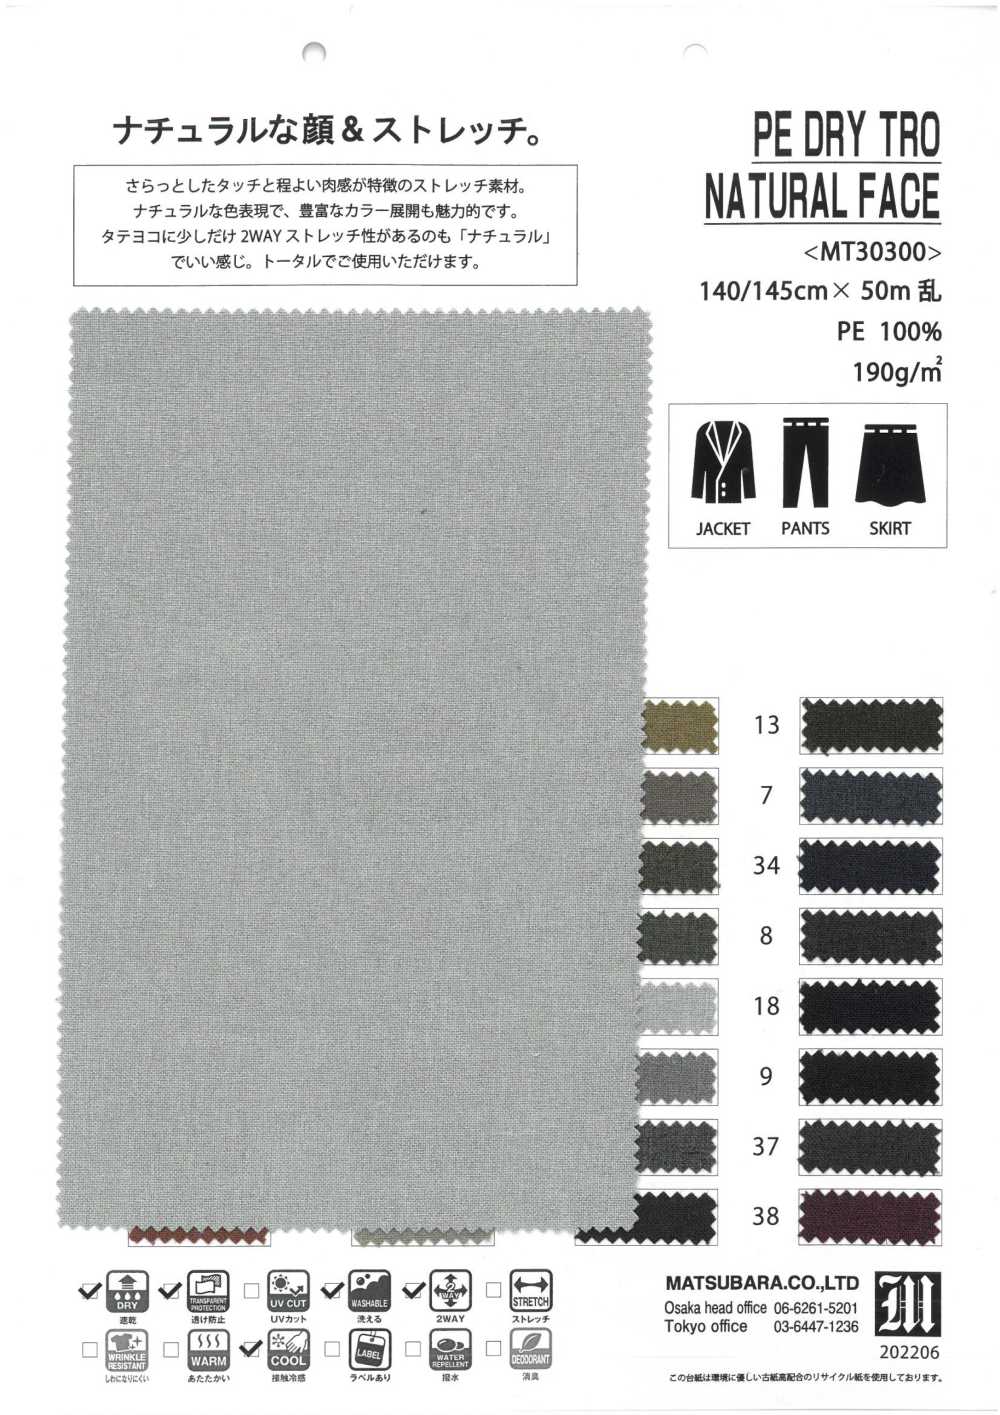 MT30300 PE DRY TRO NATURAL FACE[Textile / Fabric] Matsubara